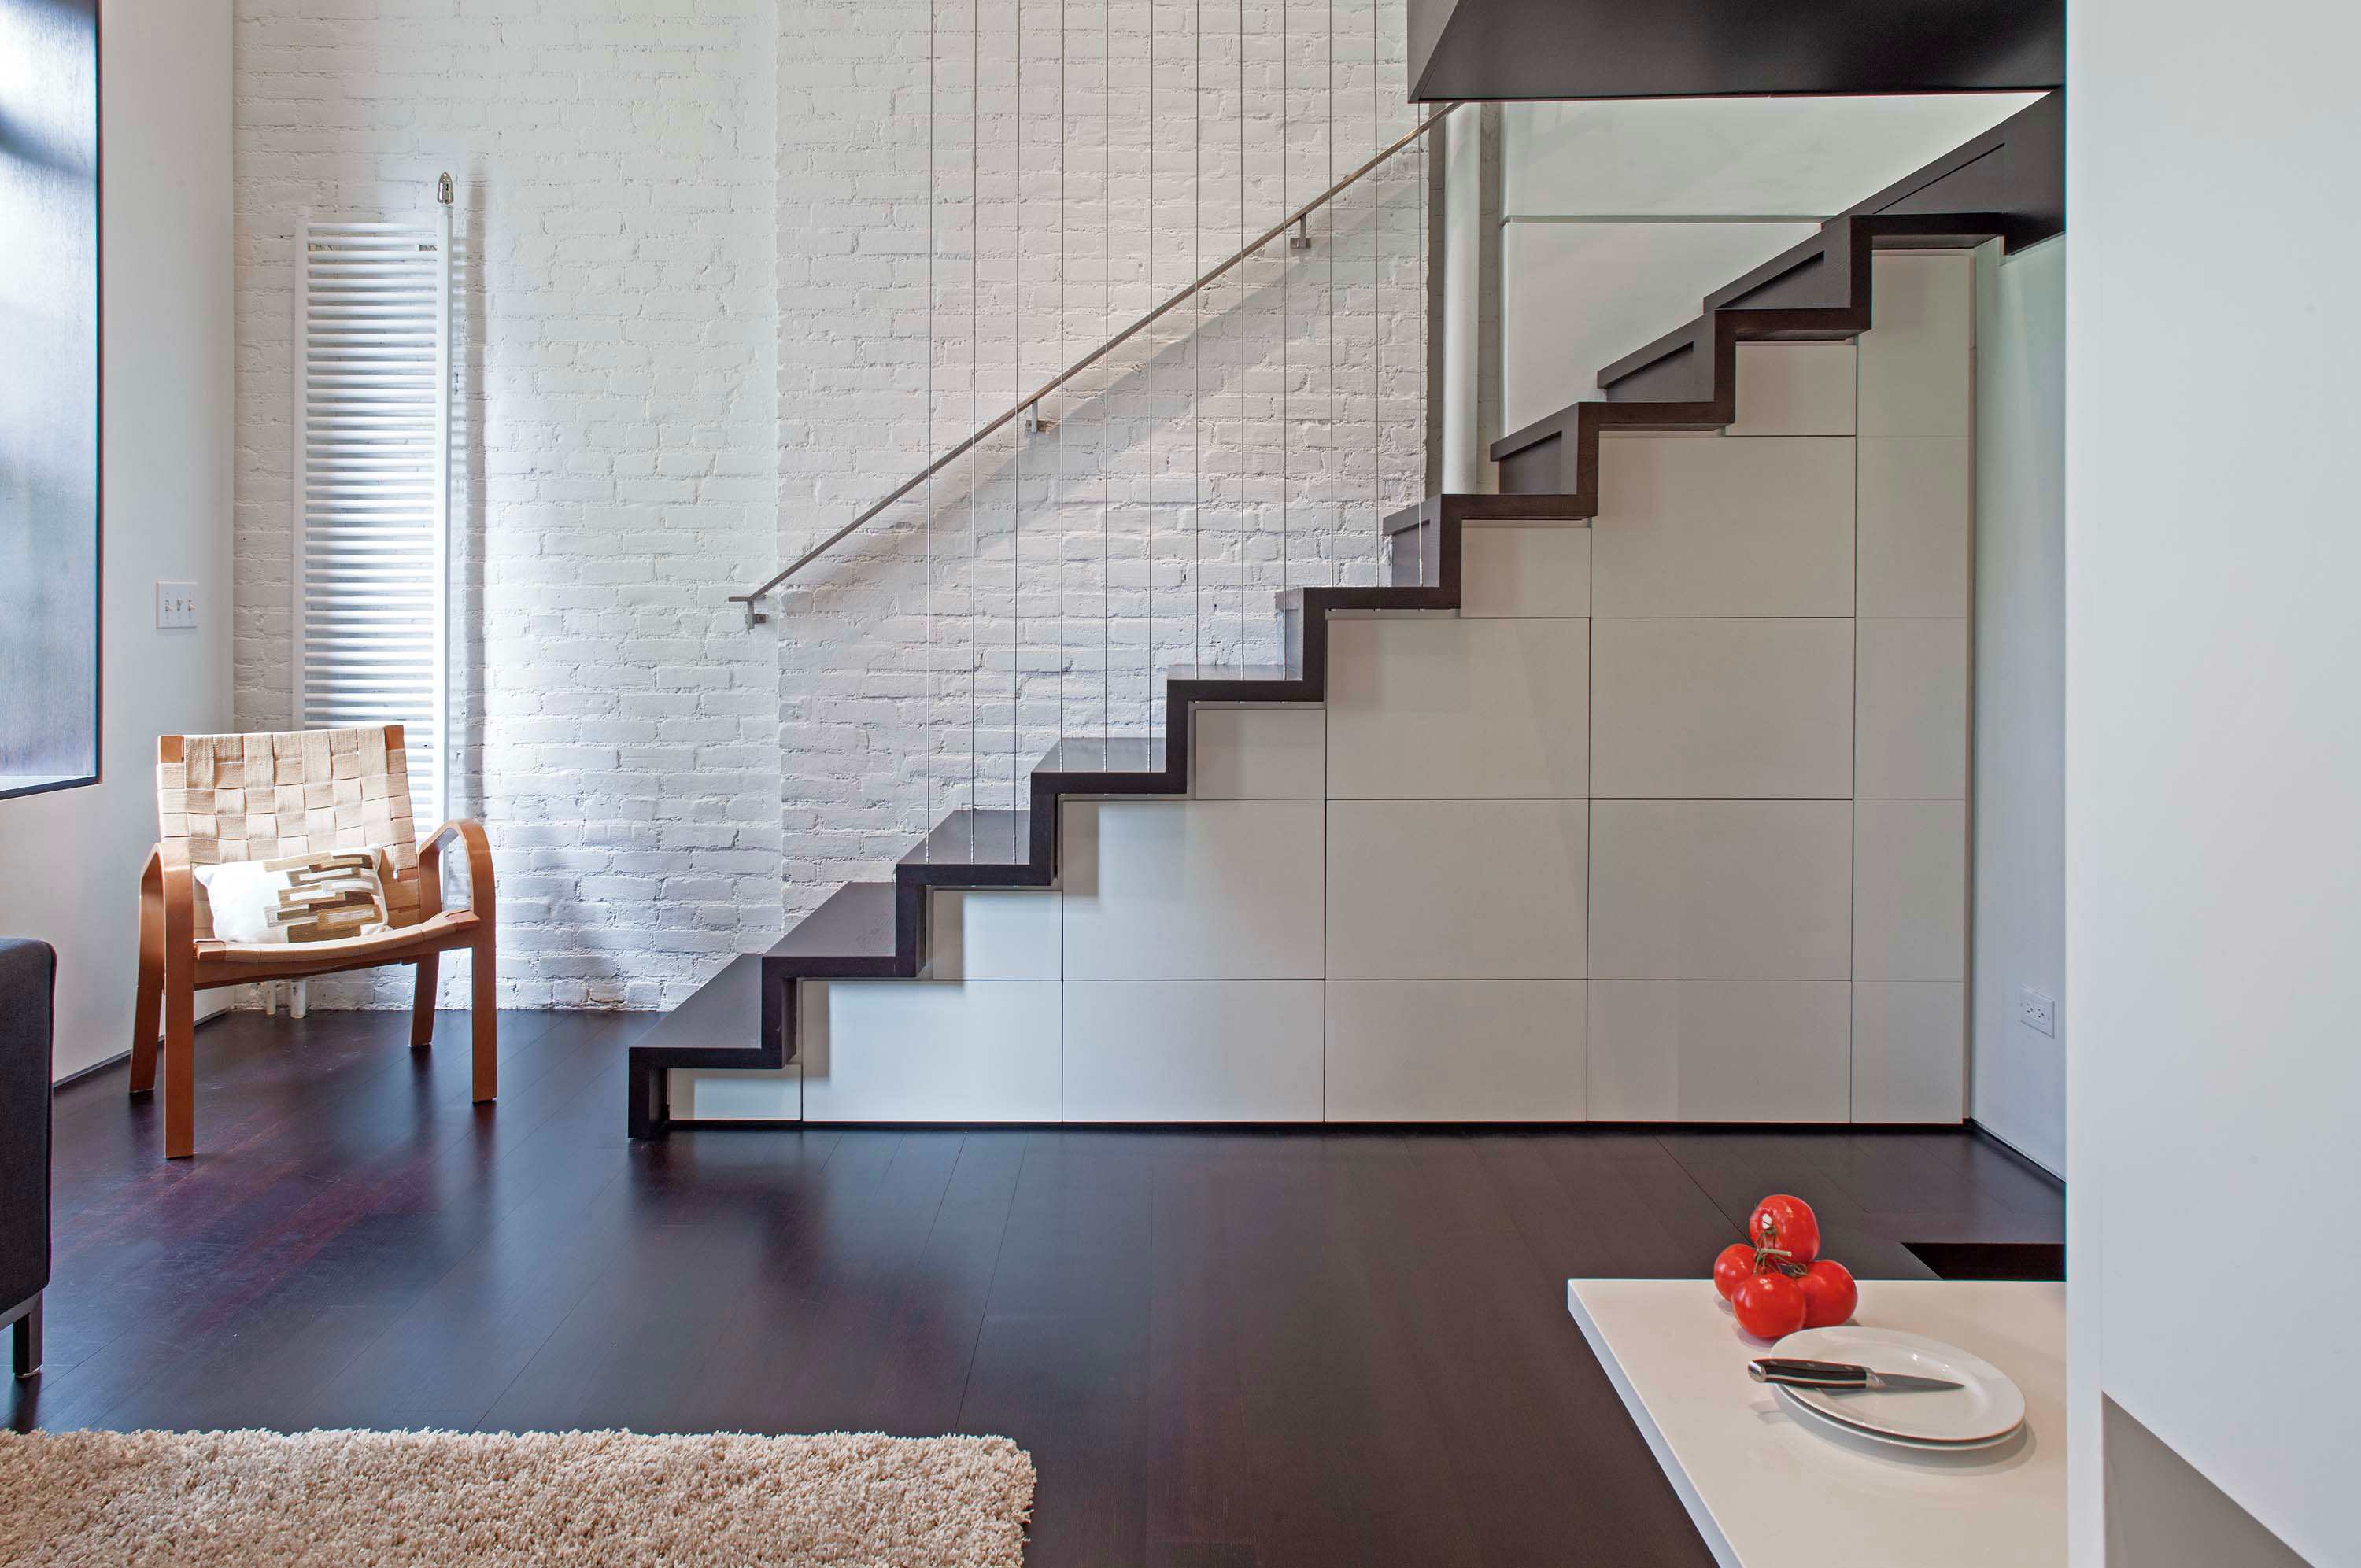 Staircase of Manhattan Microloft by Specht Novak Architects, shot by Taggart Sorensen.